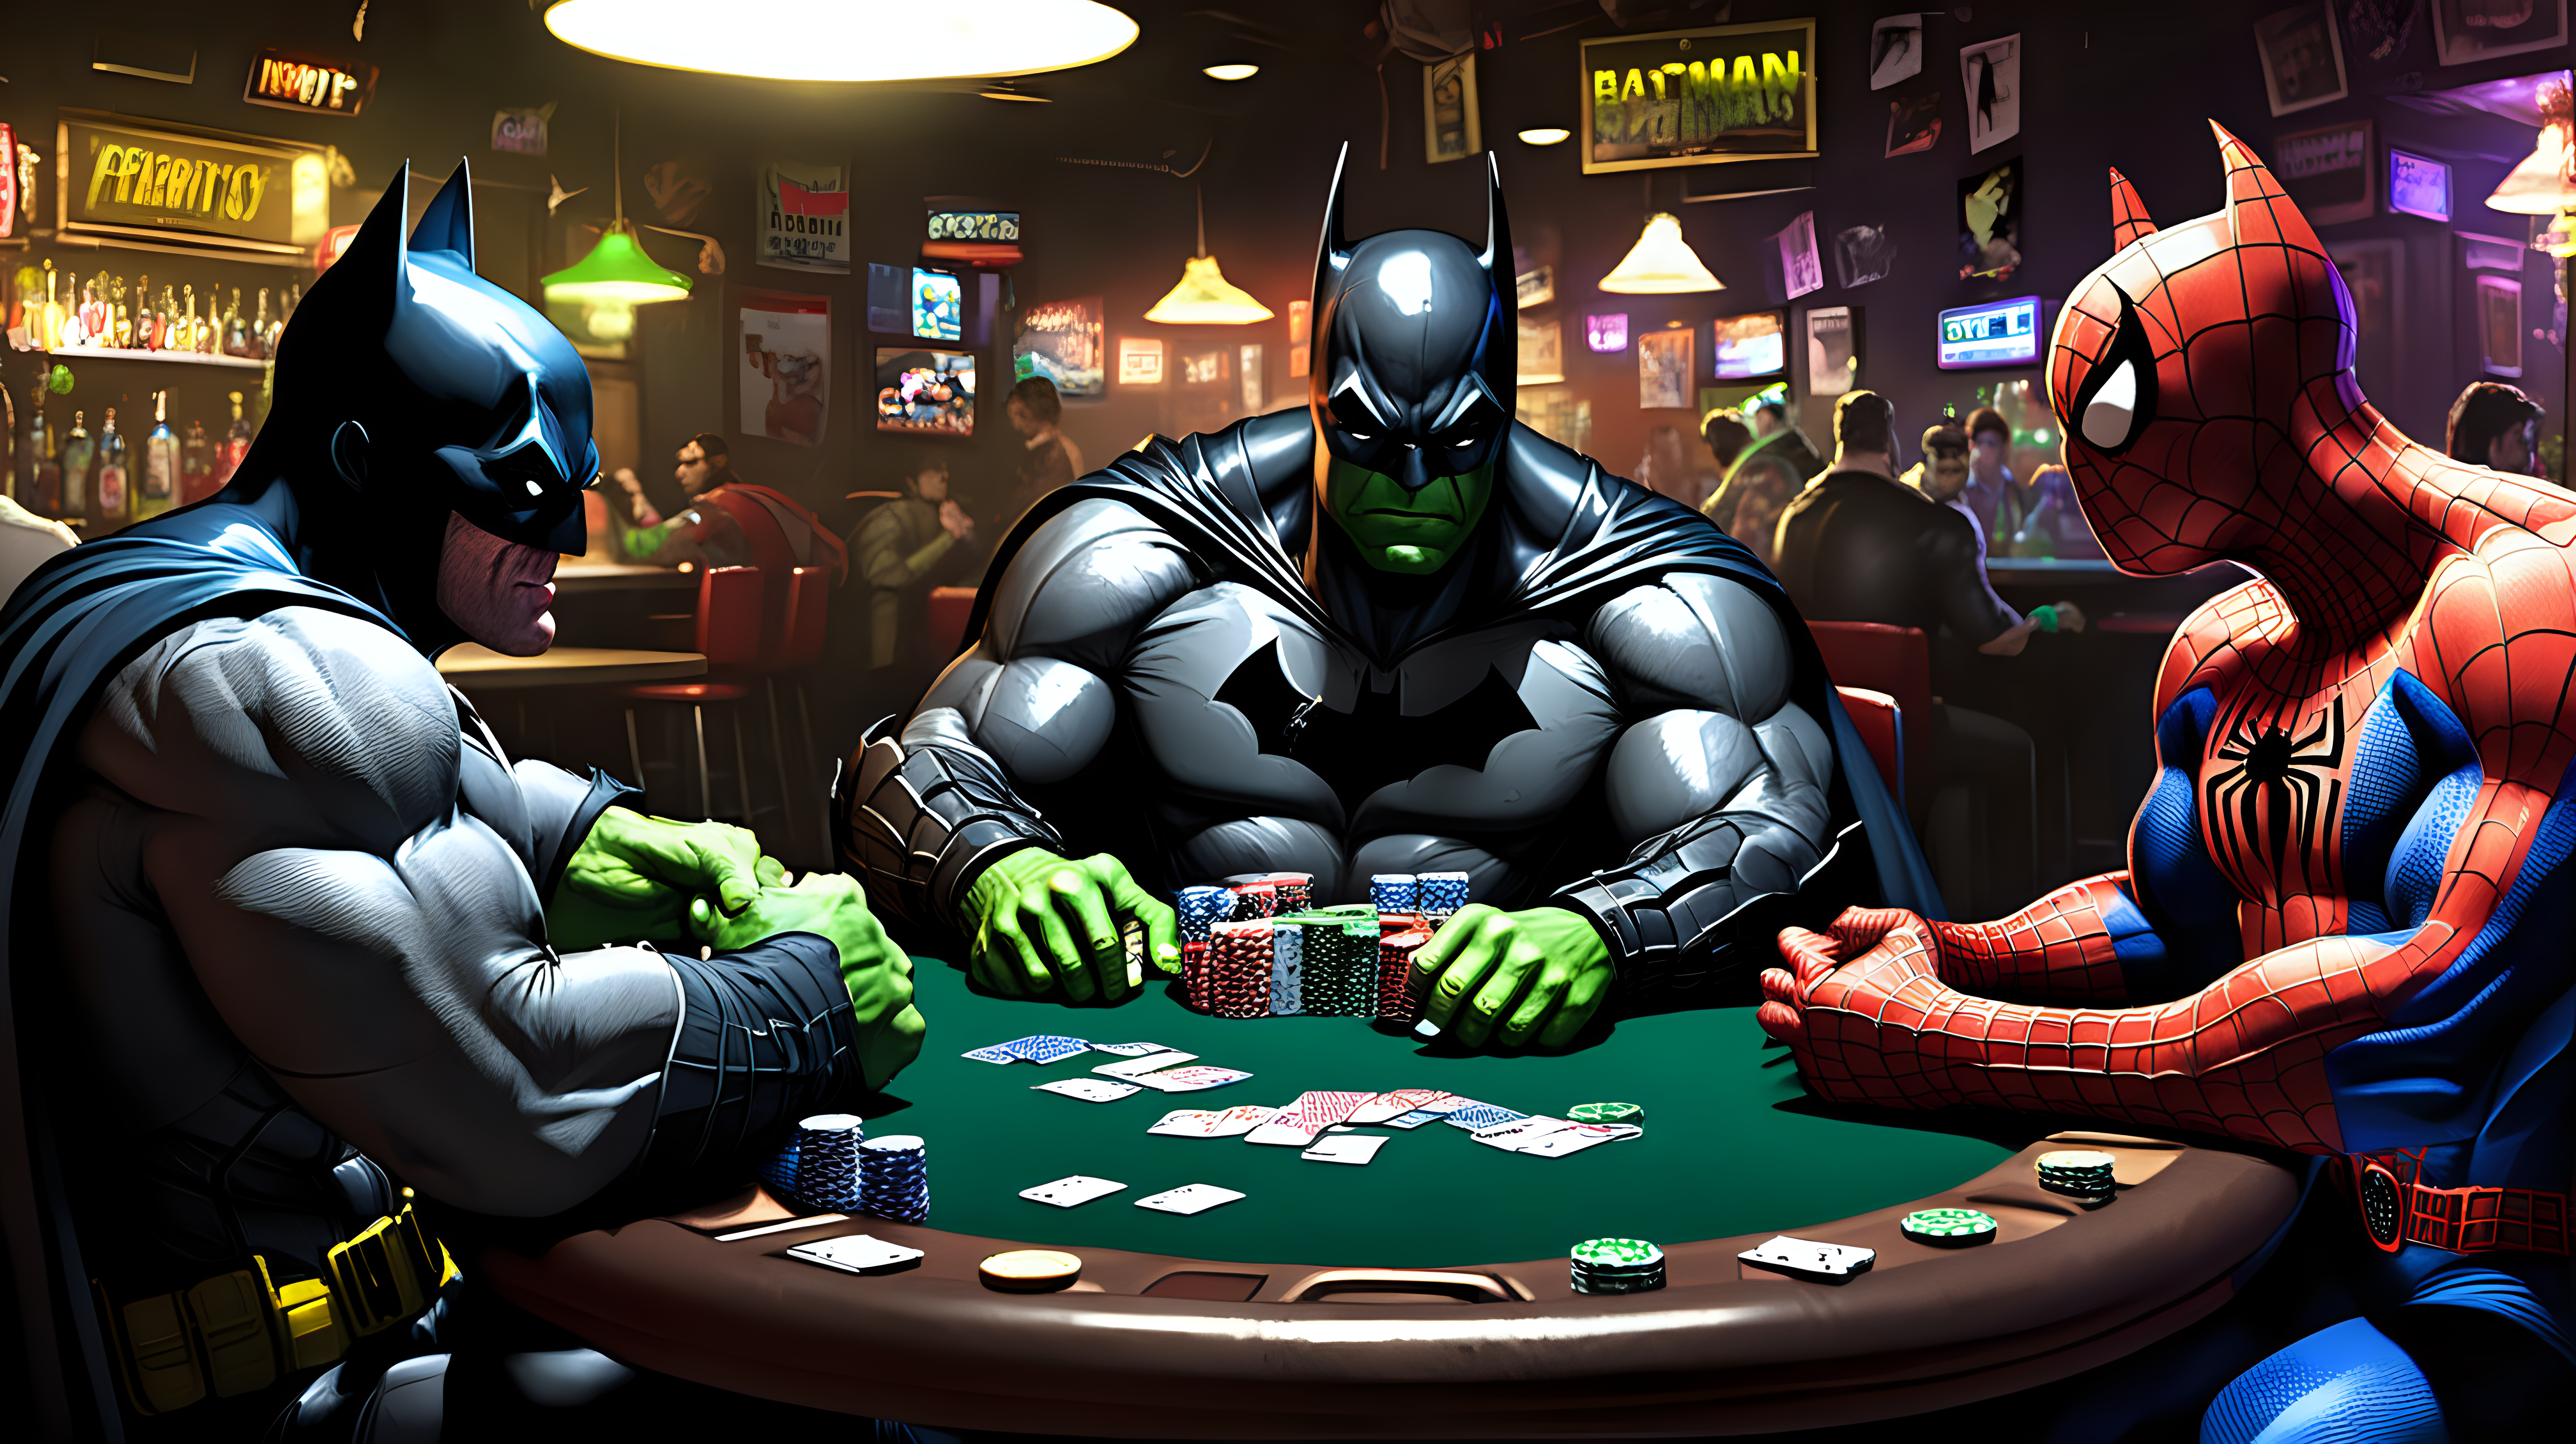 The Batman and Spiderman and Hulk playing poker